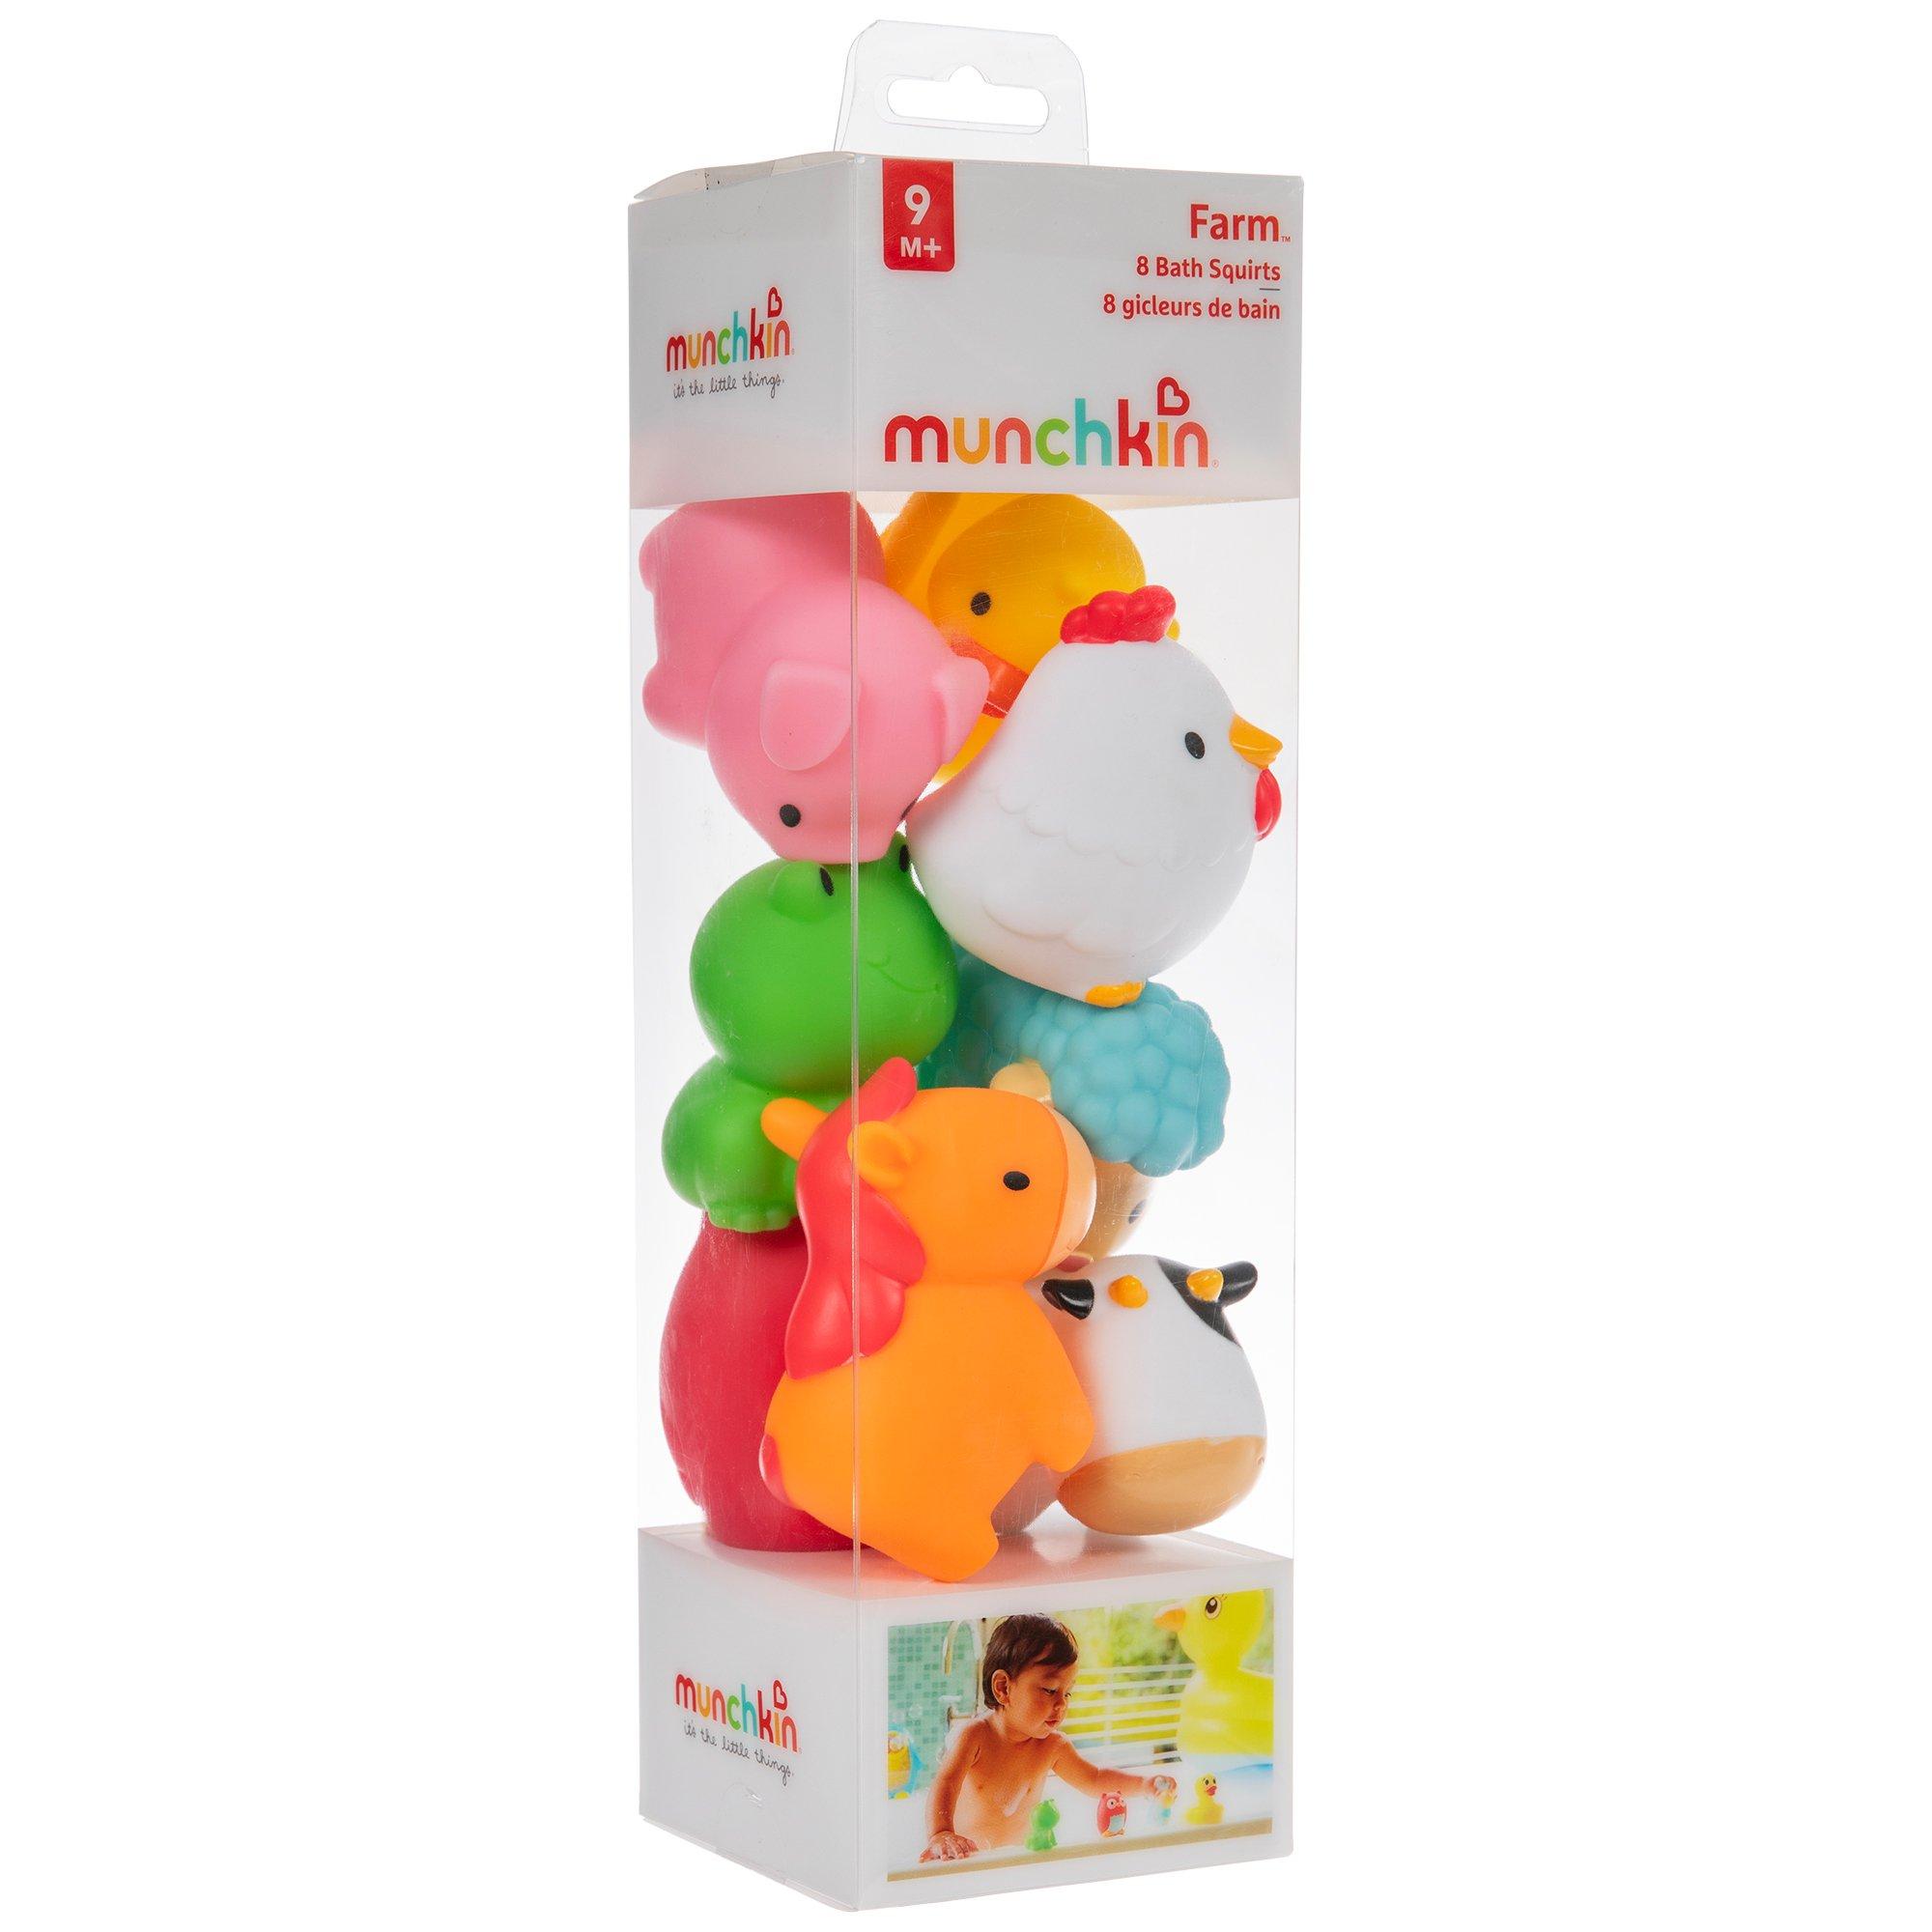 Munchkin Farm Squirts Bath Toy, 8 Pack